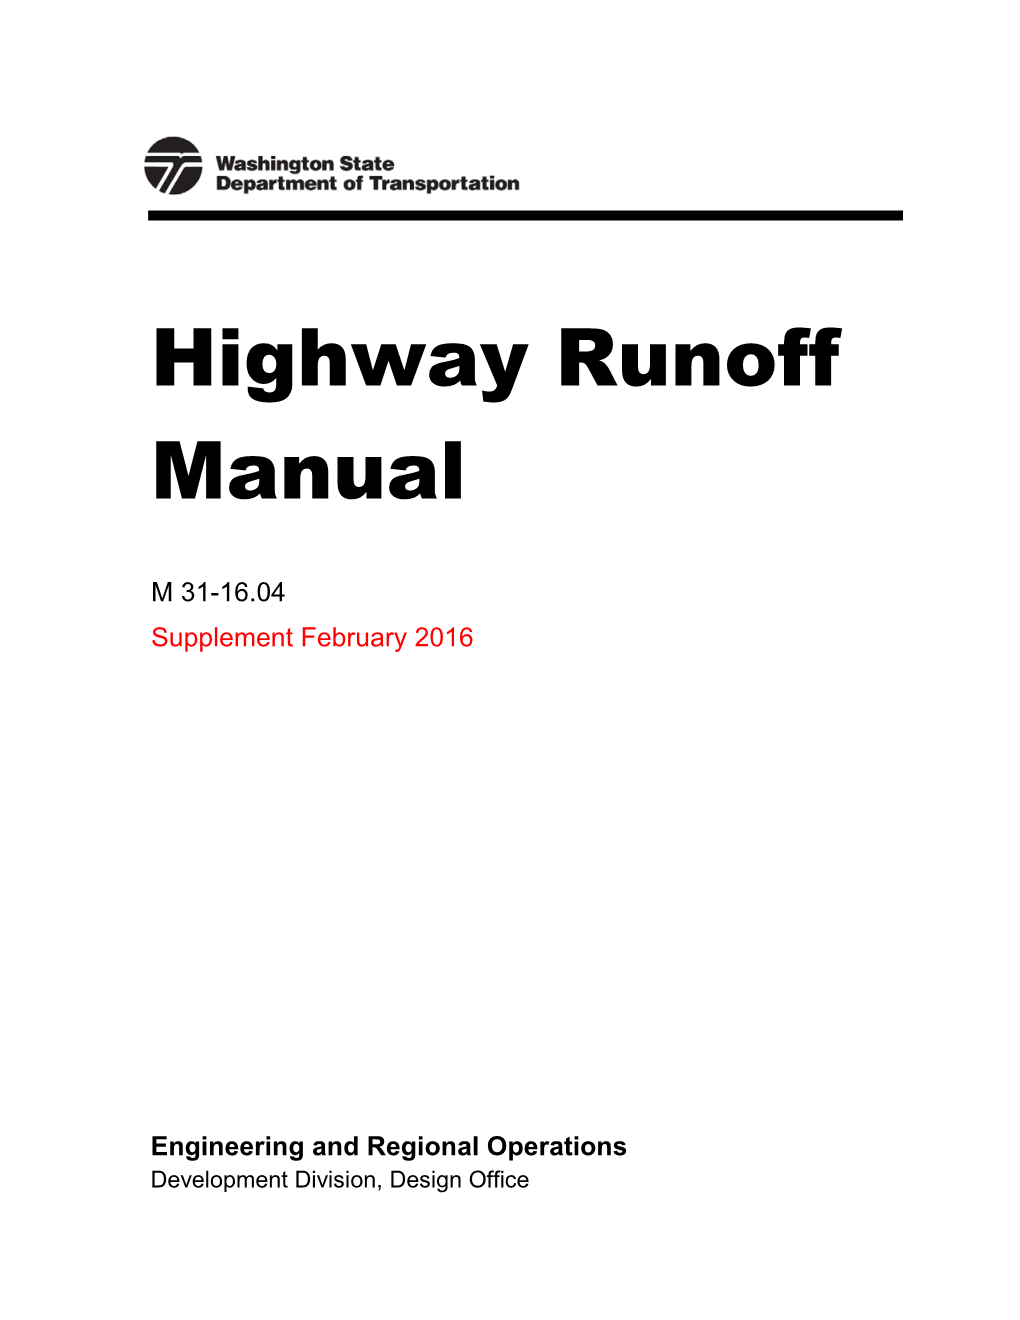 Highway Runoff Manual